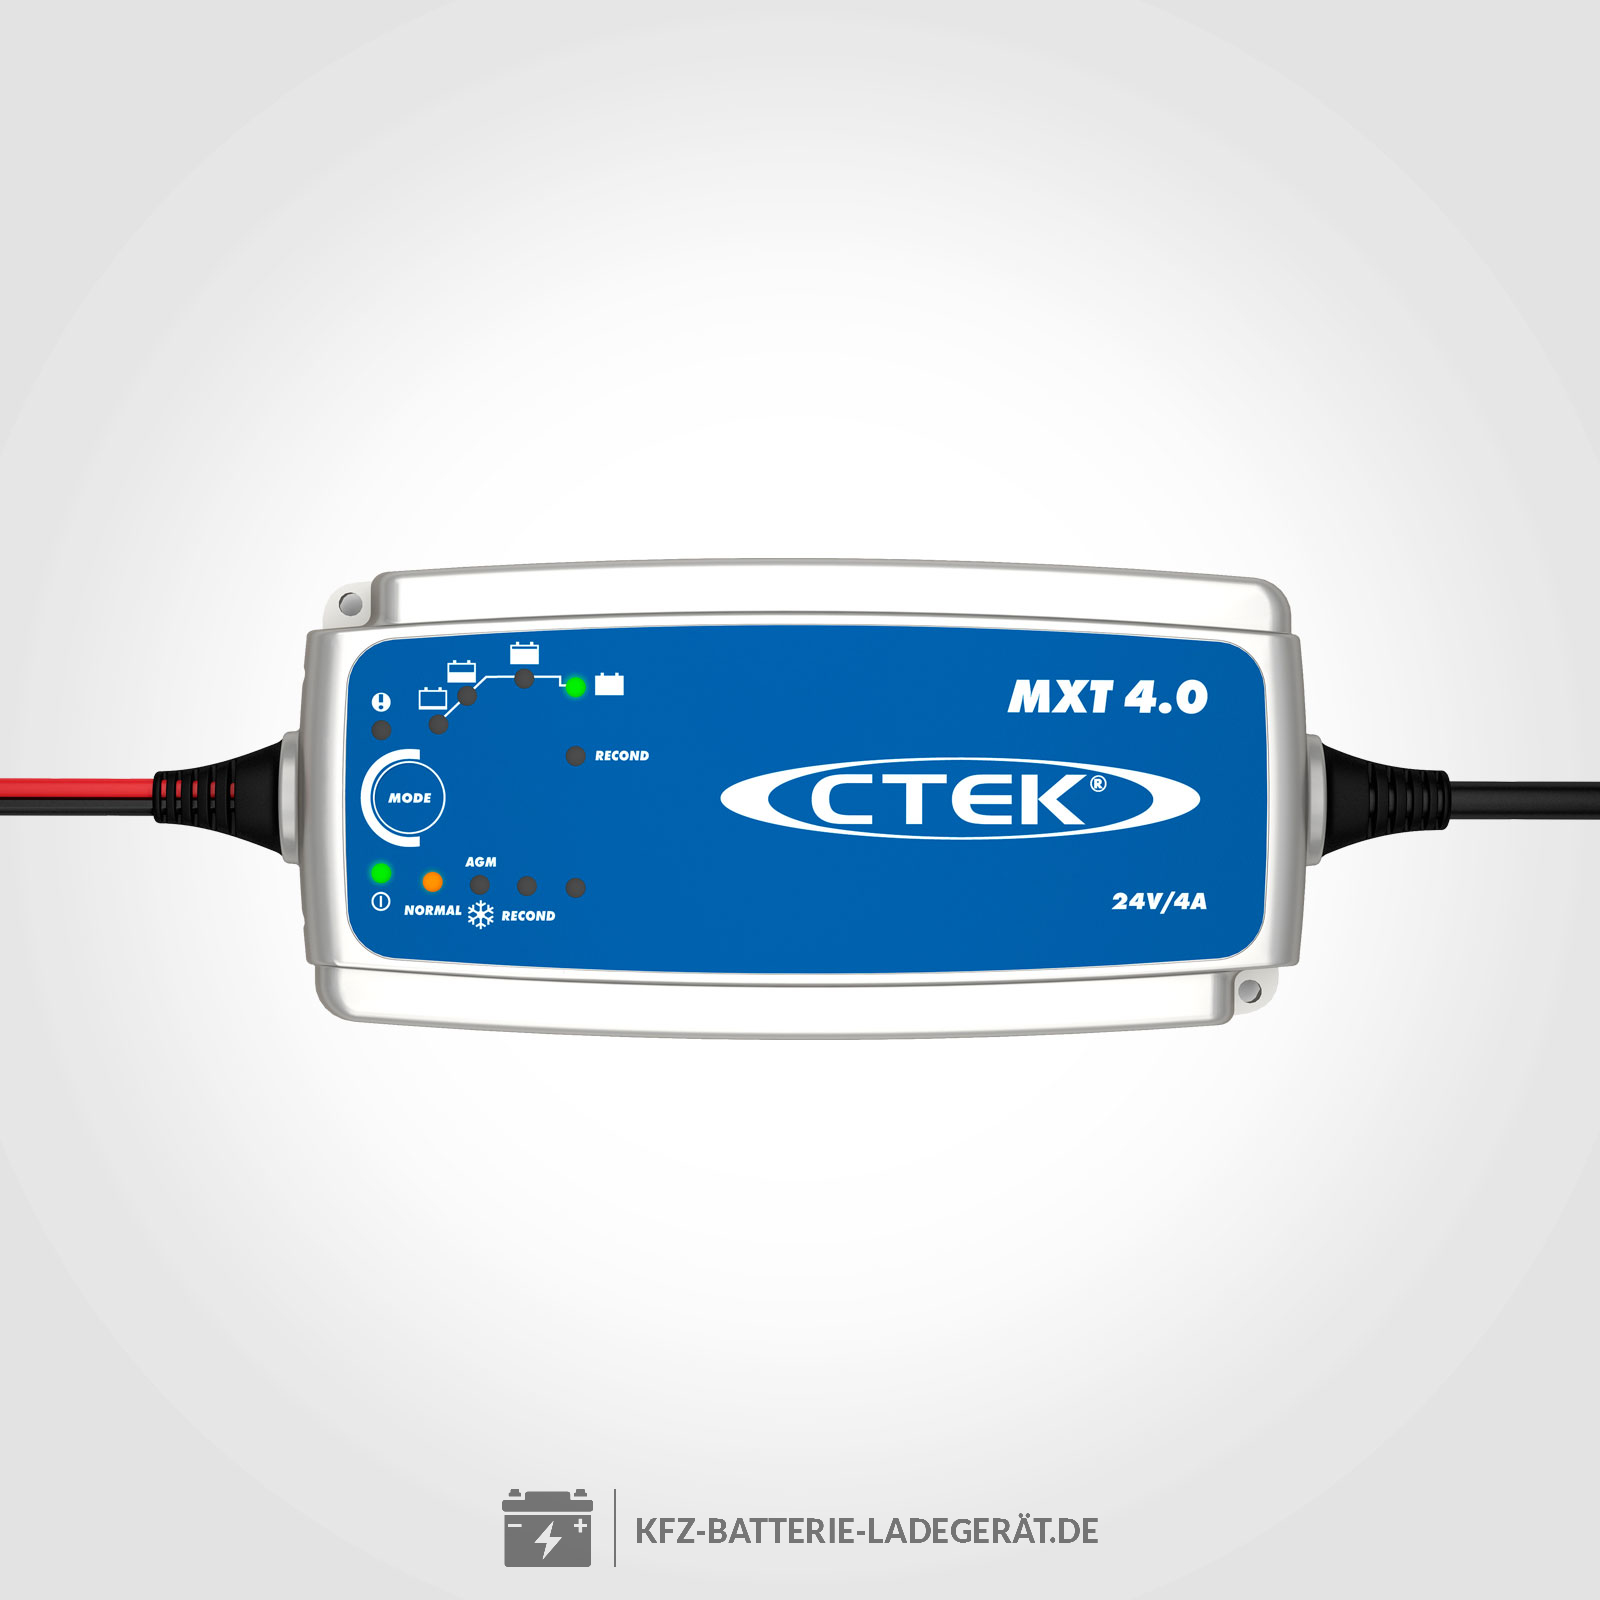 CTEK Ladeampel für CTEK-Ladegeräte, mit Batterieklemmen, Kfz-Technik /  Outdoor-Technik